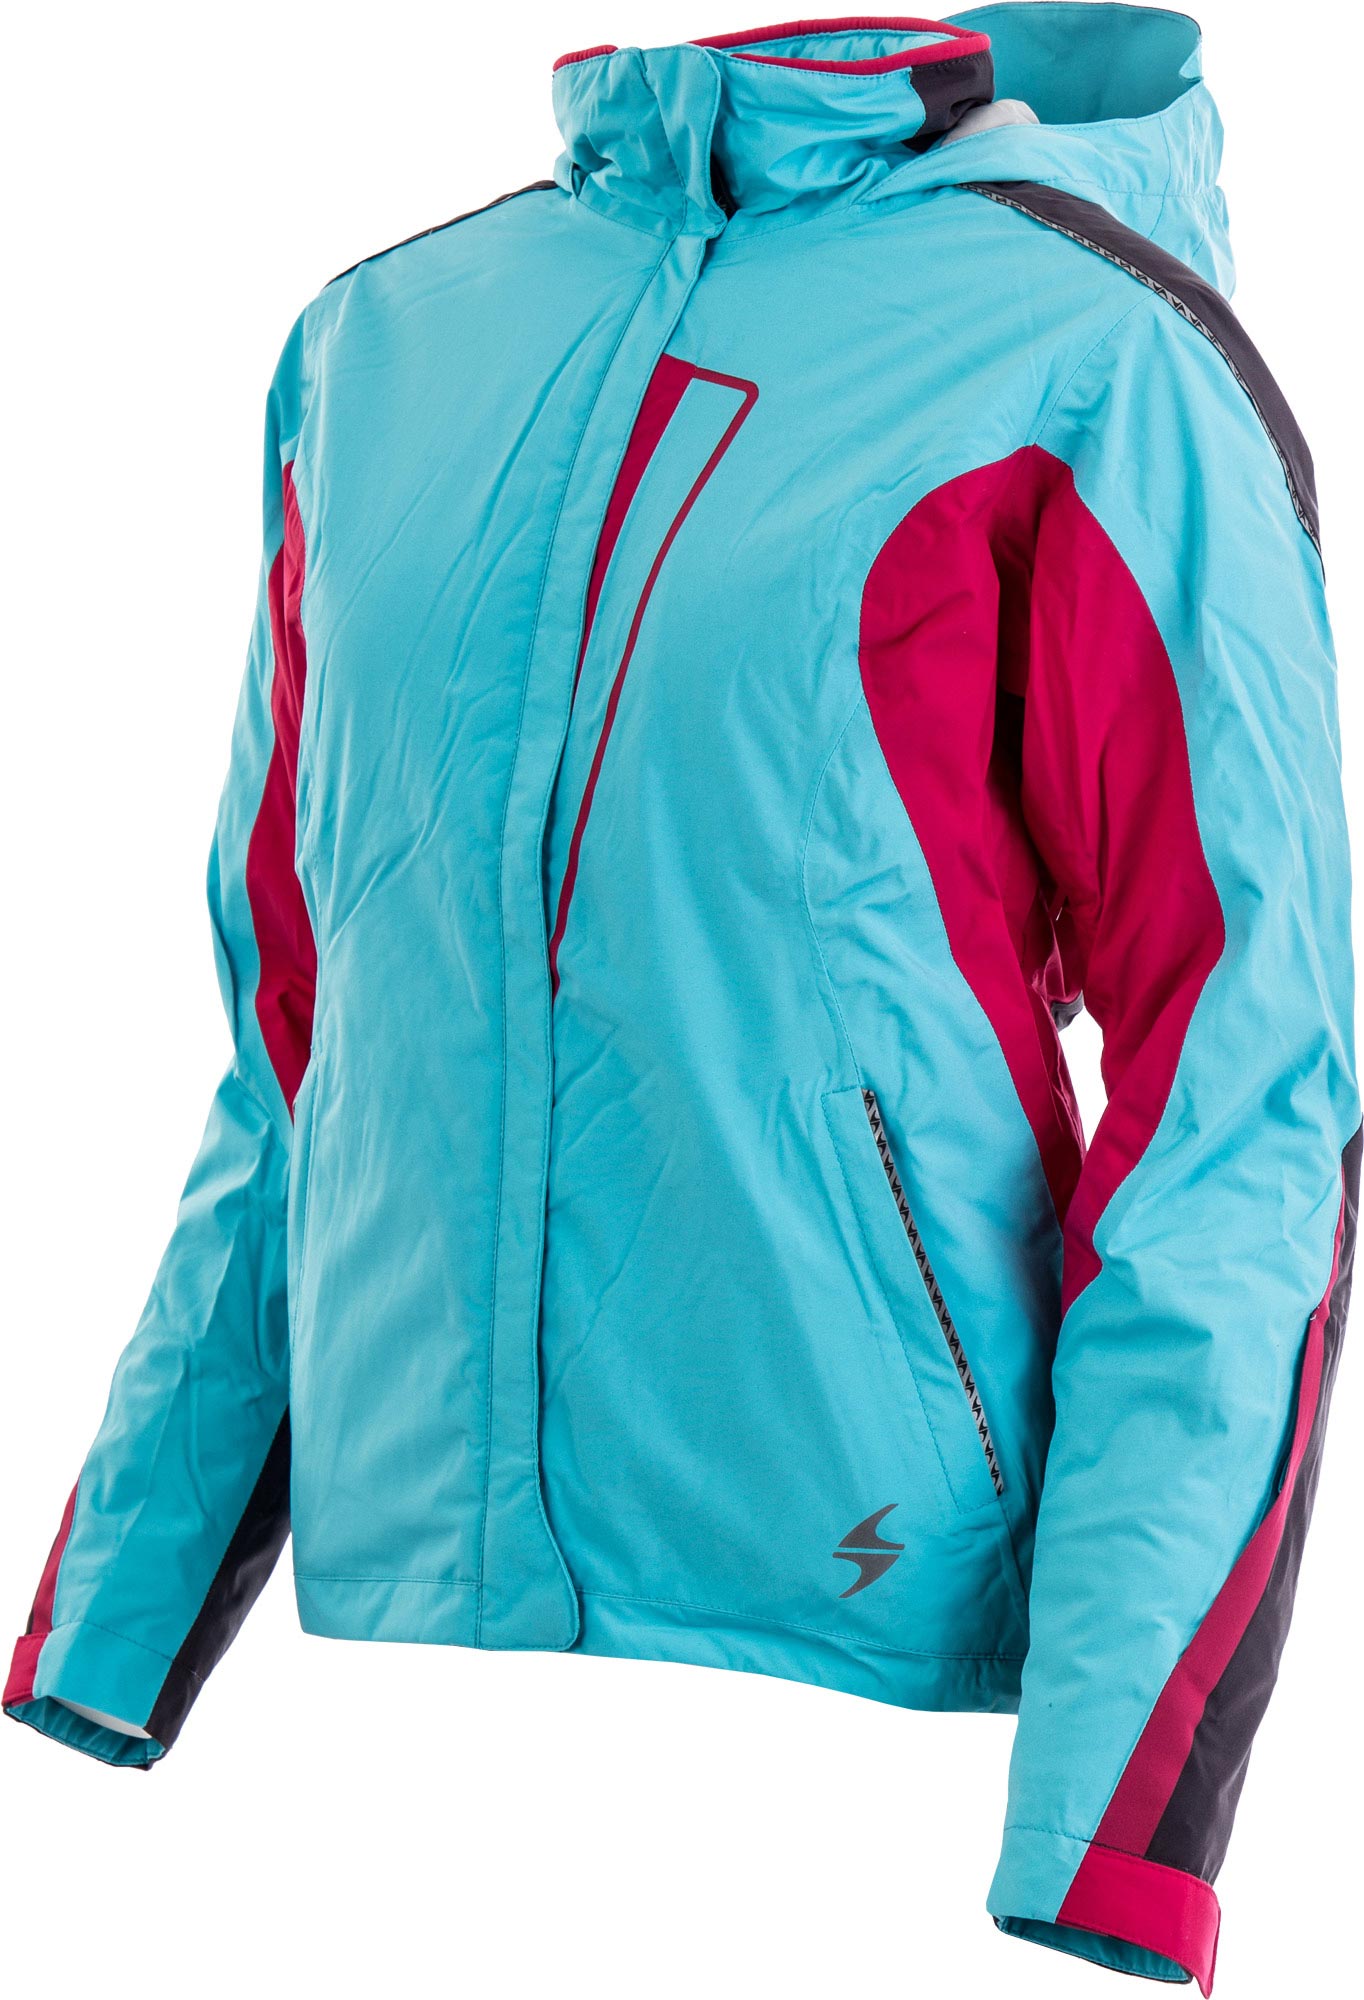 ESPRIT SKI JACKET - Women's Ski Jacket